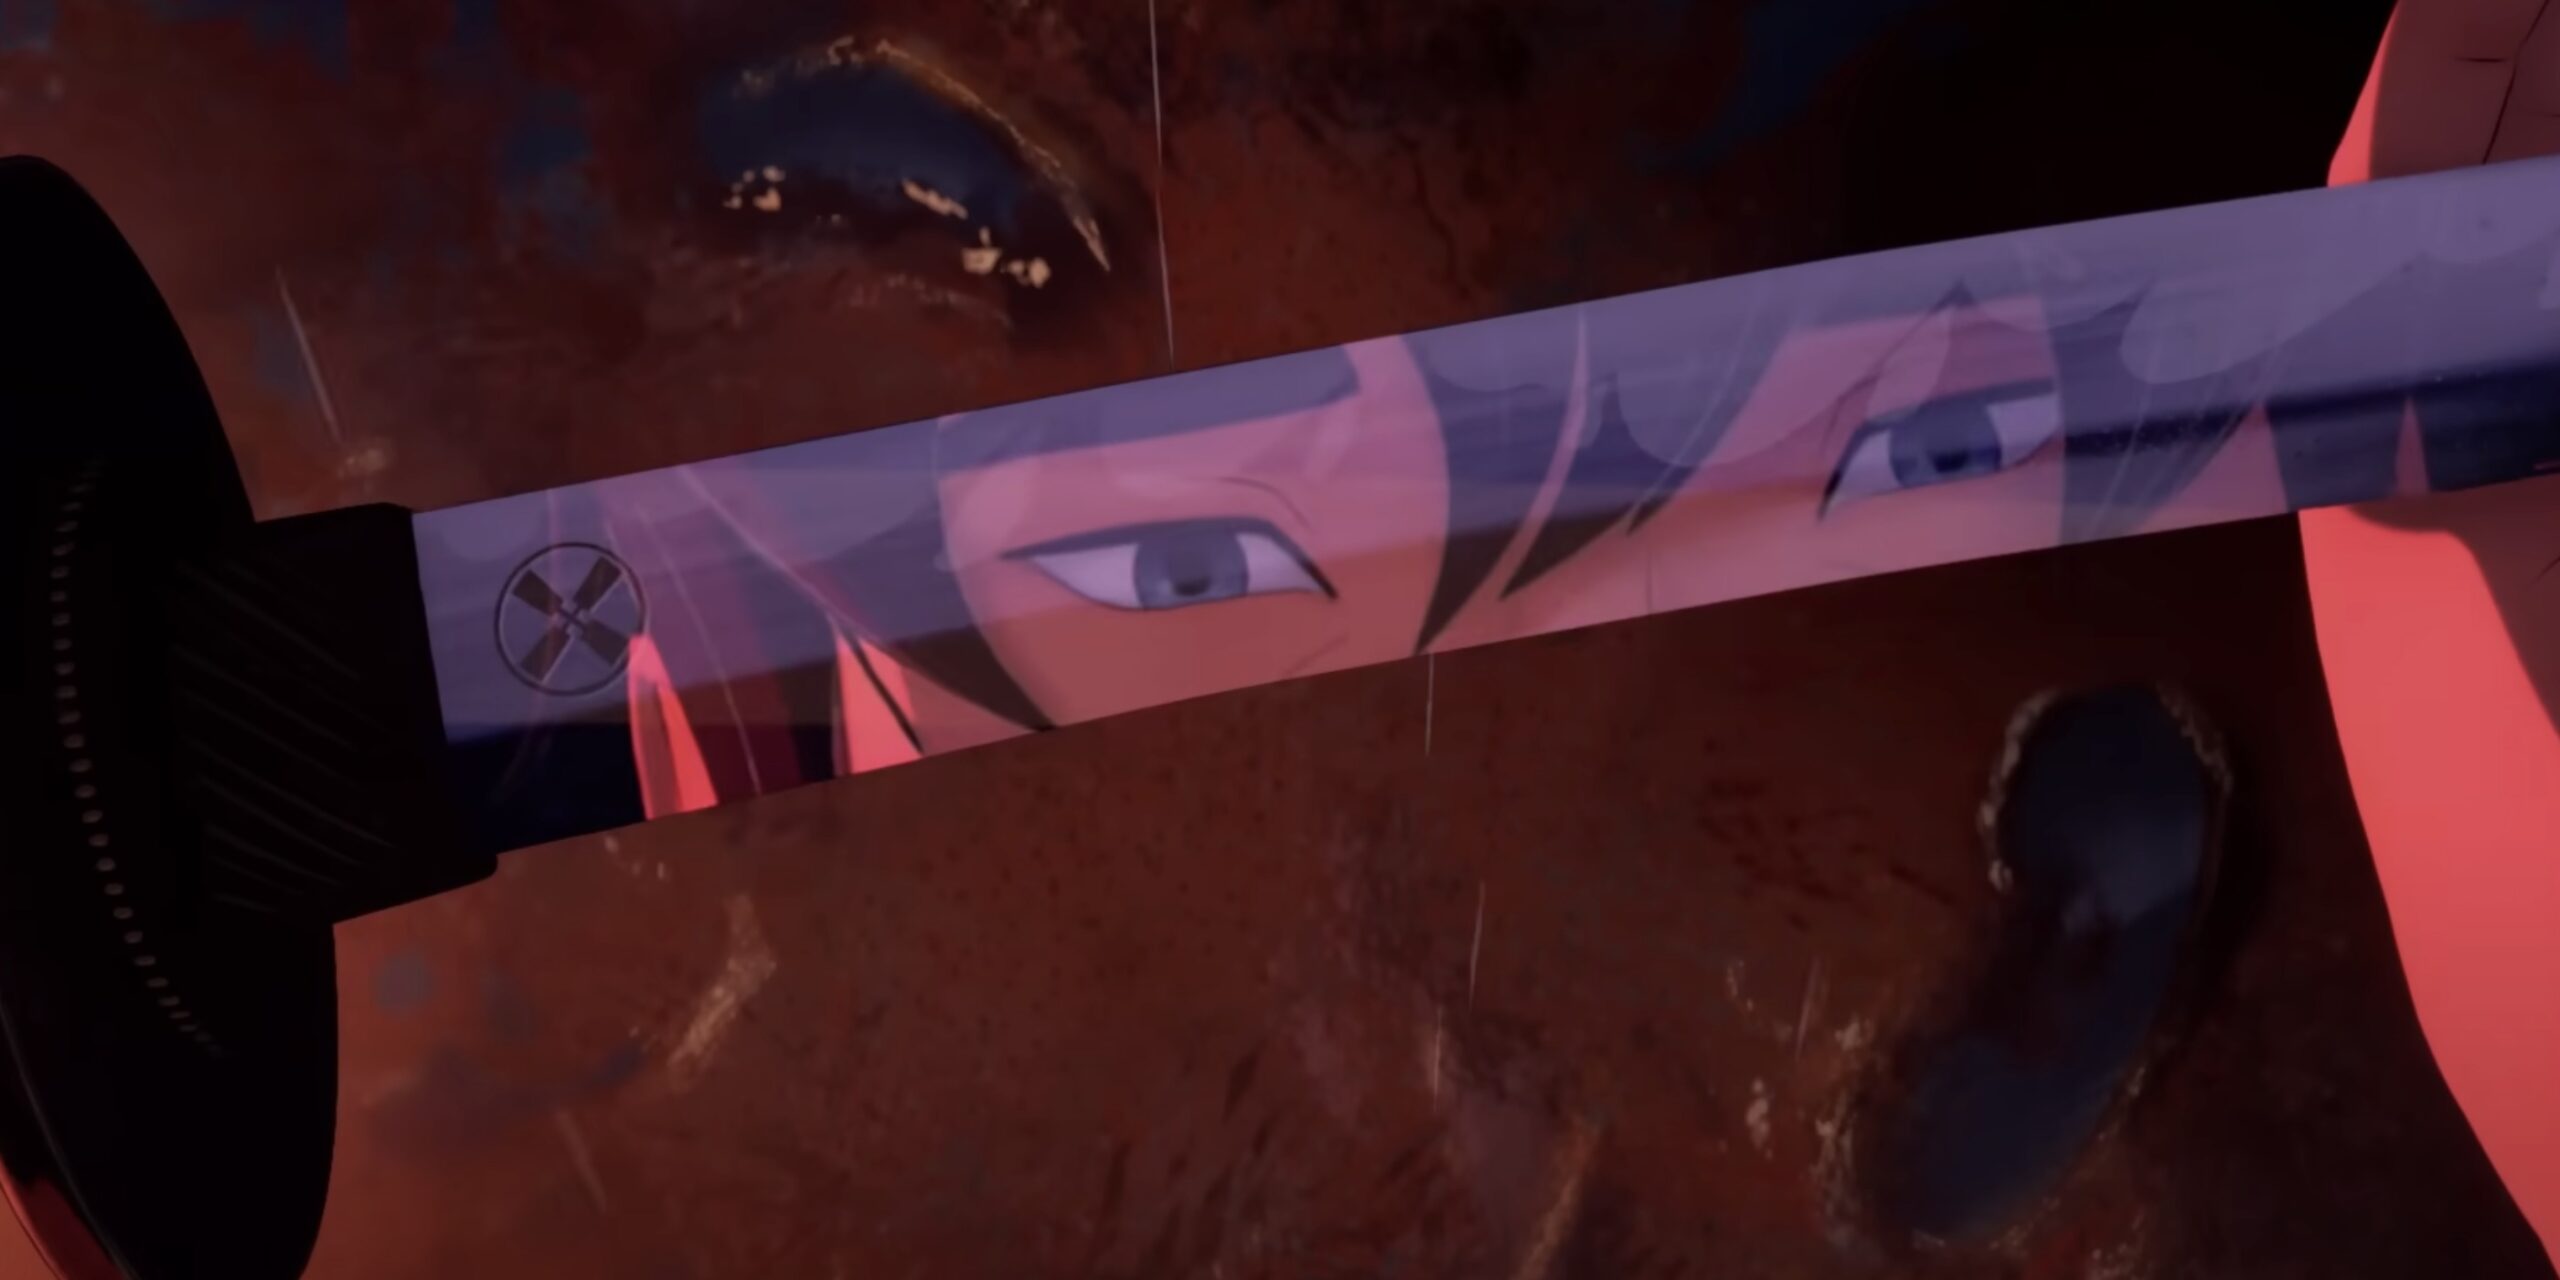 Blue Eye Samurai Paid Homage To Naruto In An Epic Scene